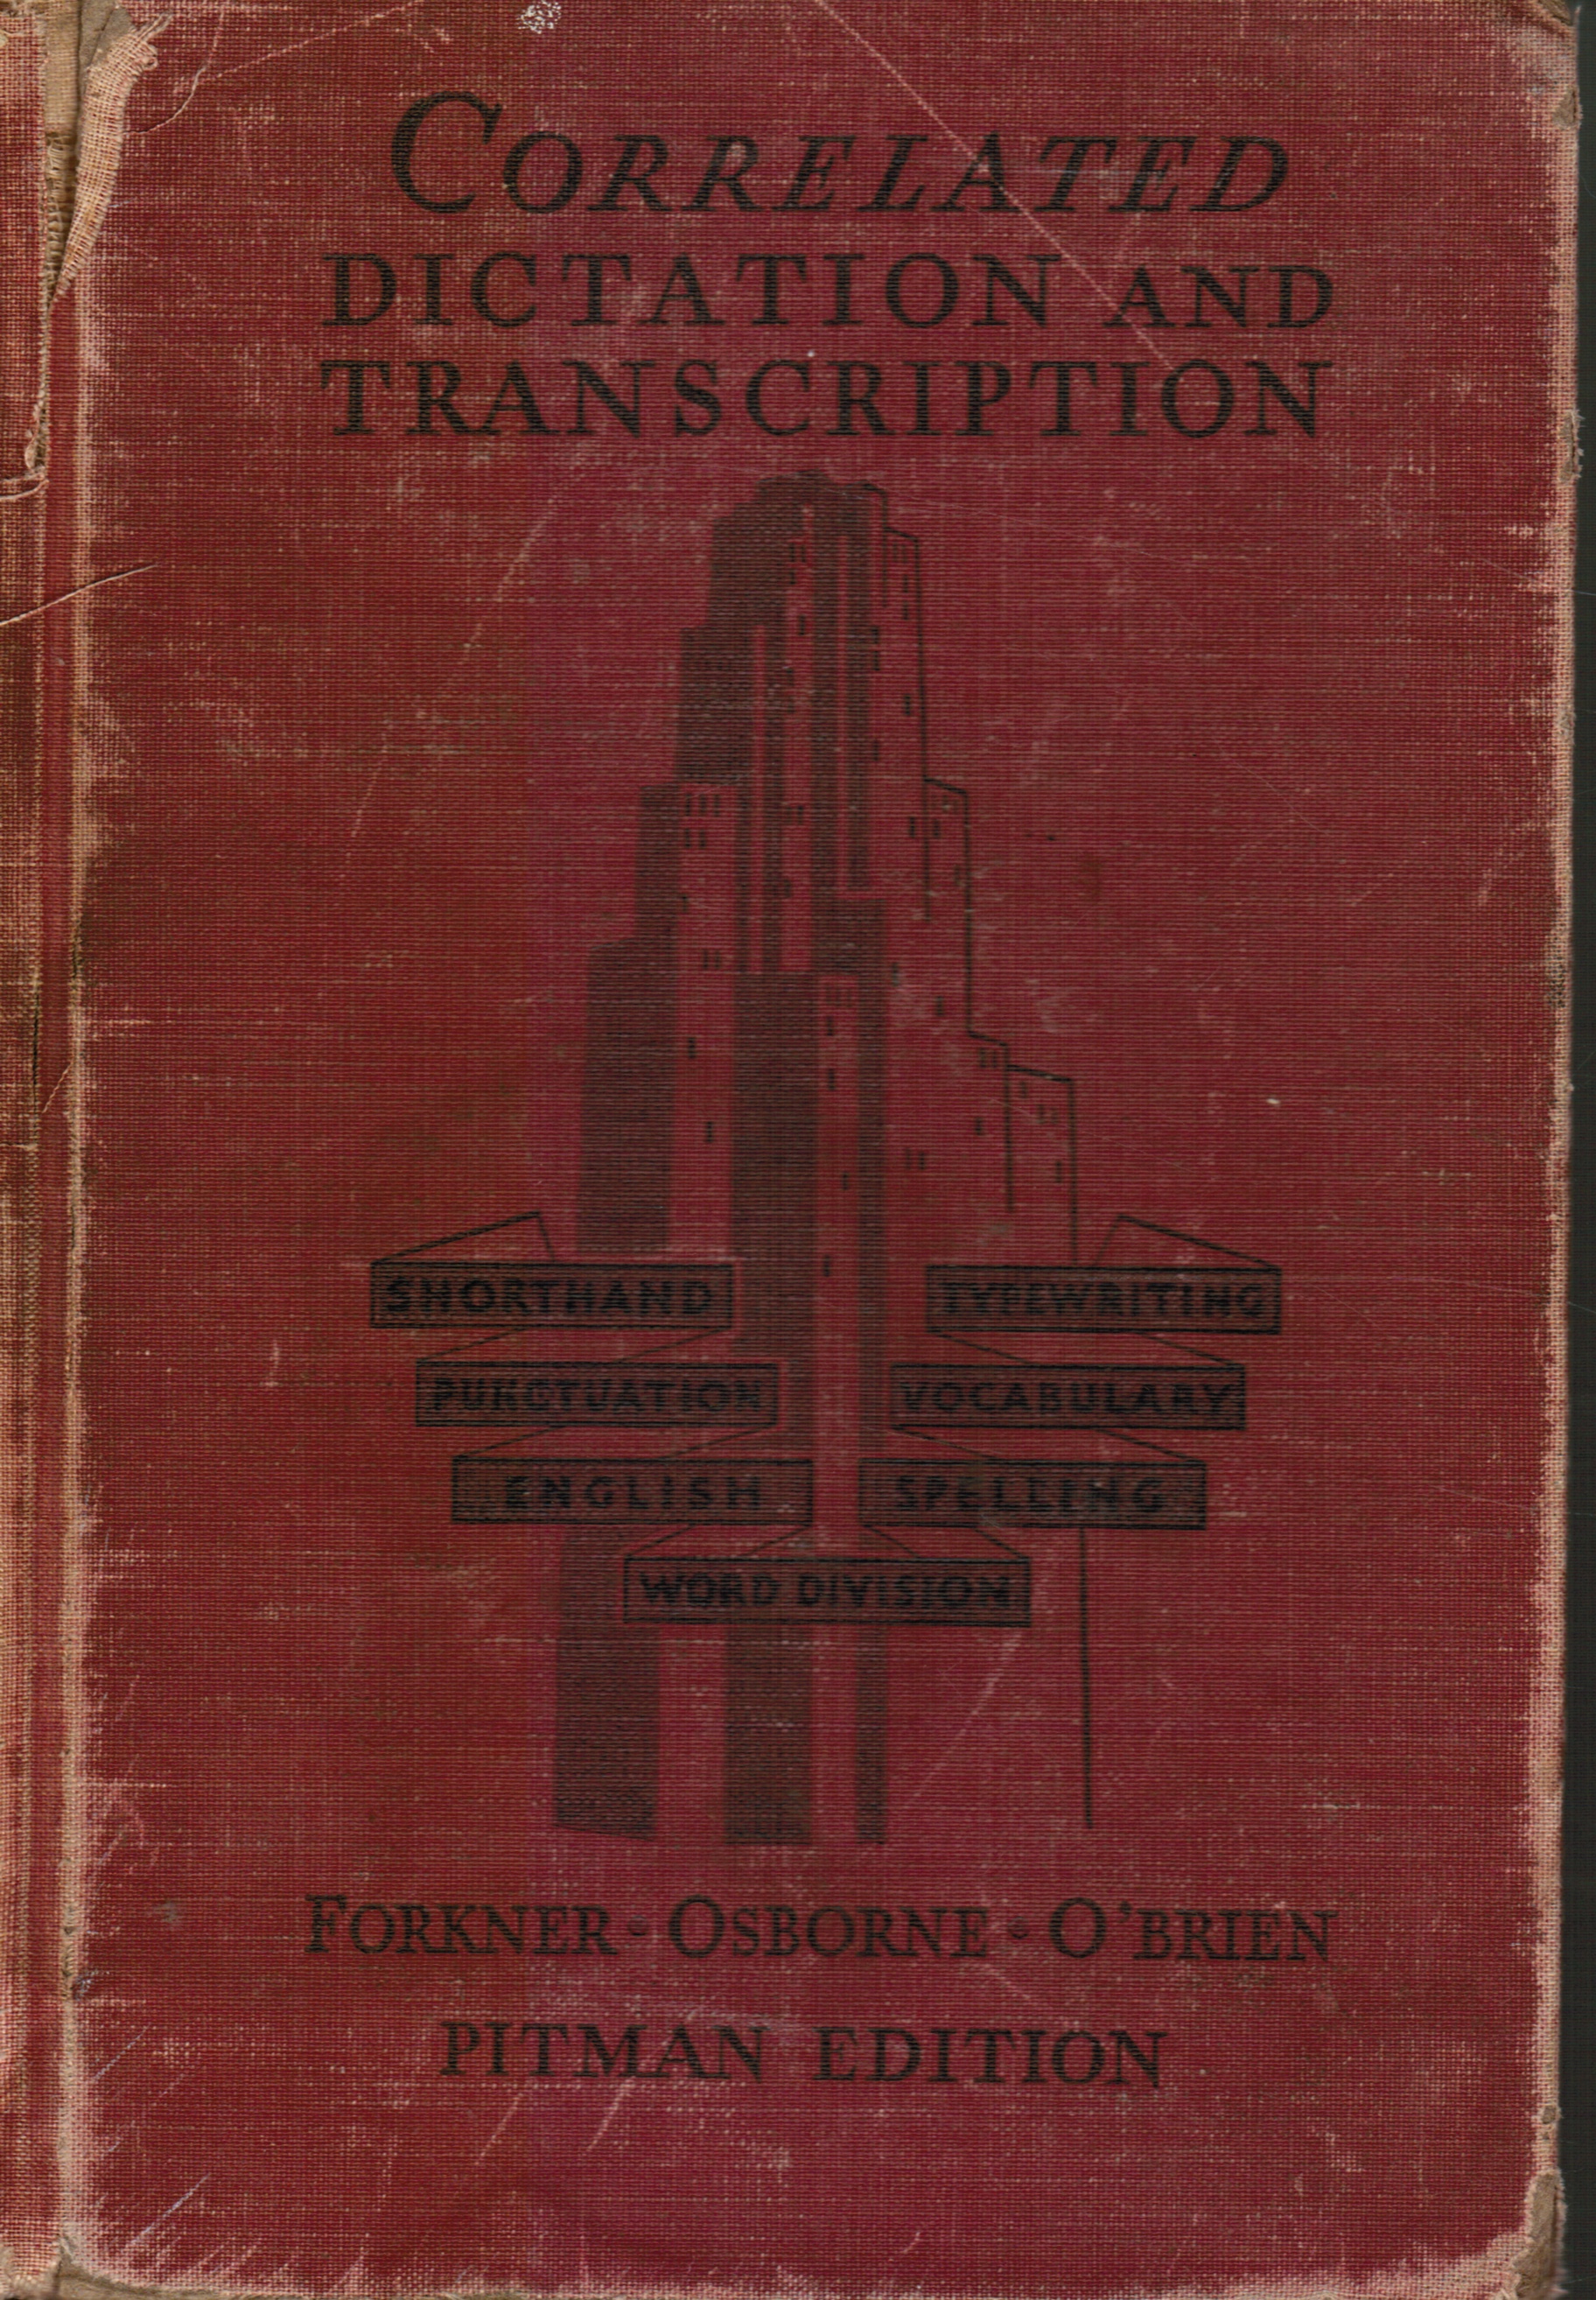 FORKNER, HAMDEN LANDON; AGNES OSBORNE, JAMES E. O'BRIEN - Correlated Dictation and Transcription